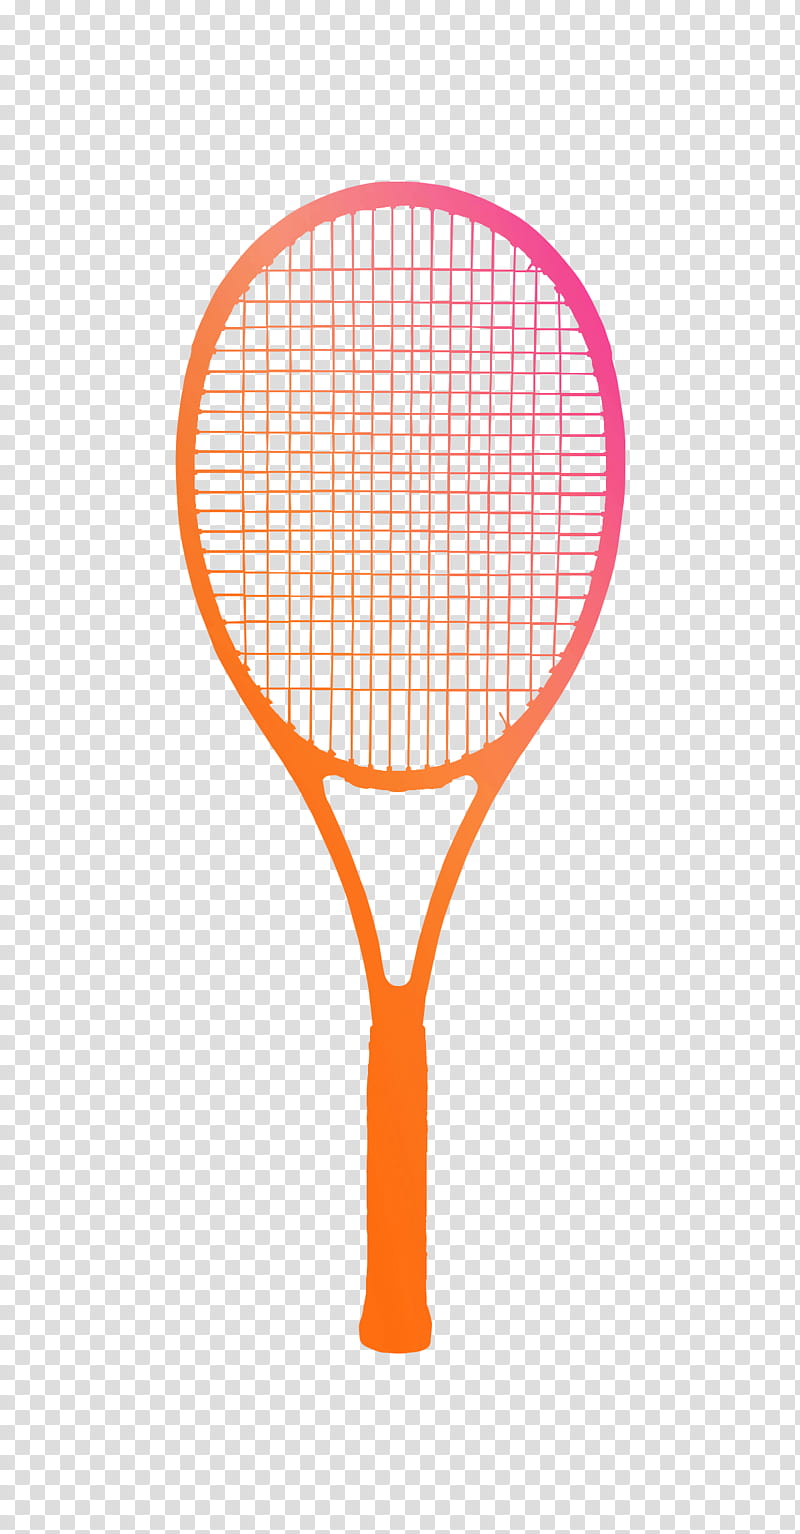 Tennis Rackets Racket, Head, Babolat, Rakieta Tenisowa, Head Radical Jr, Tennis Balls, Racquet Sport, Racketlon transparent background PNG clipart